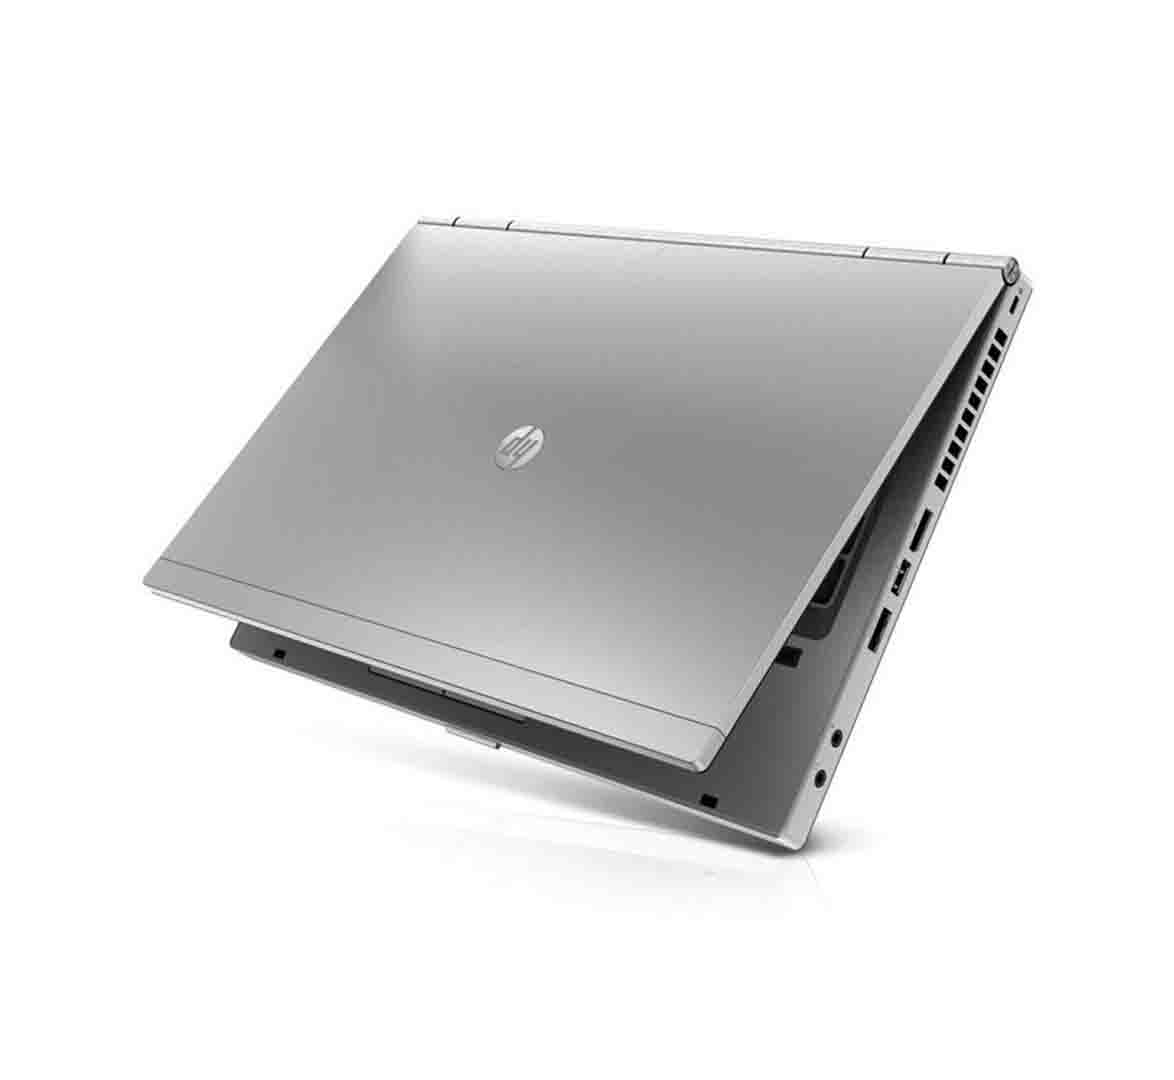 HP EliteBook 2560p Business Laptop, Intel Core i5-2nd Generation CPU, 4GB RAM, 500GB HDD, 12.5 inch Display, Windows 10 Pro, Refurbished Laptop